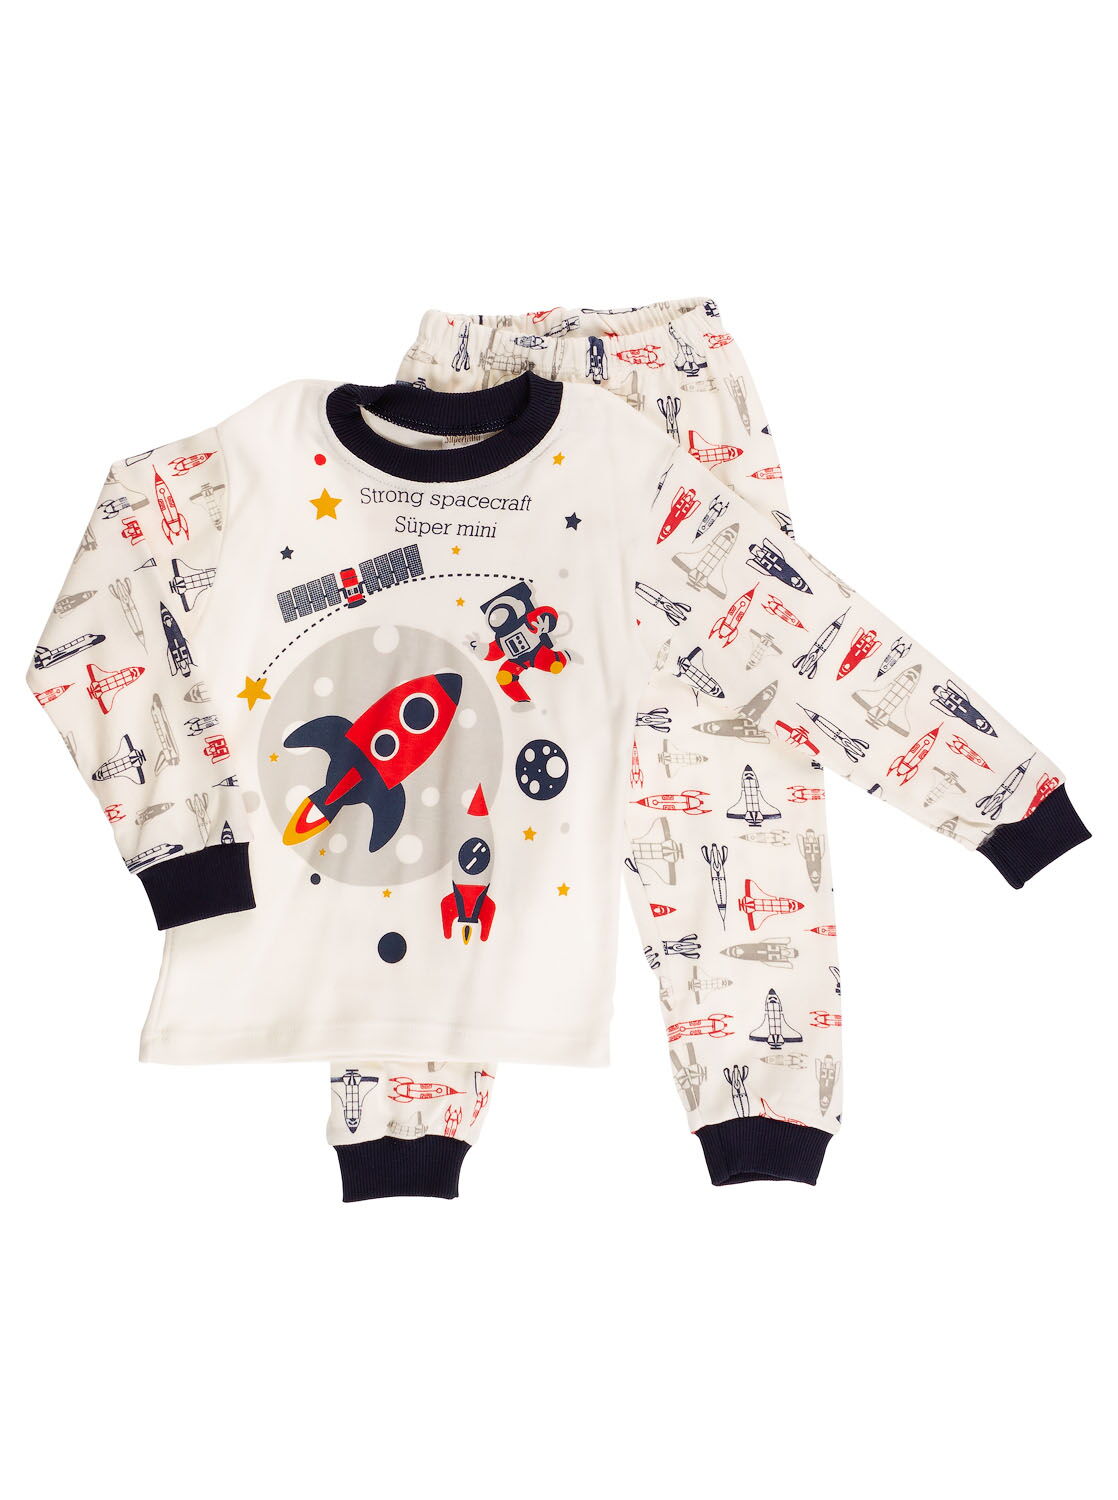 Пижама для мальчика Ракета белая 1140 - цена